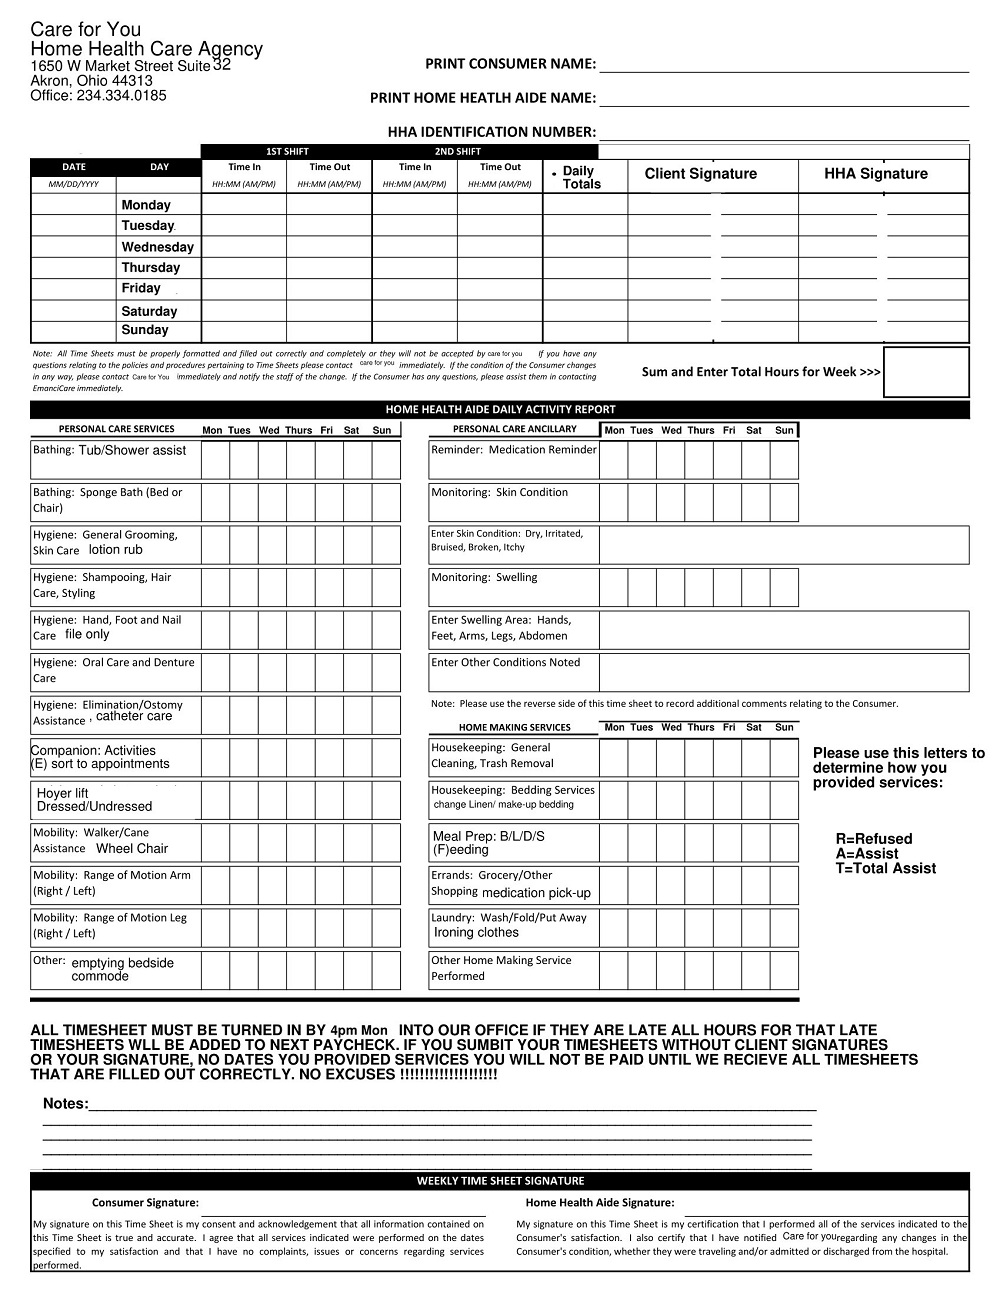 Blank Home Health Care Agency Form